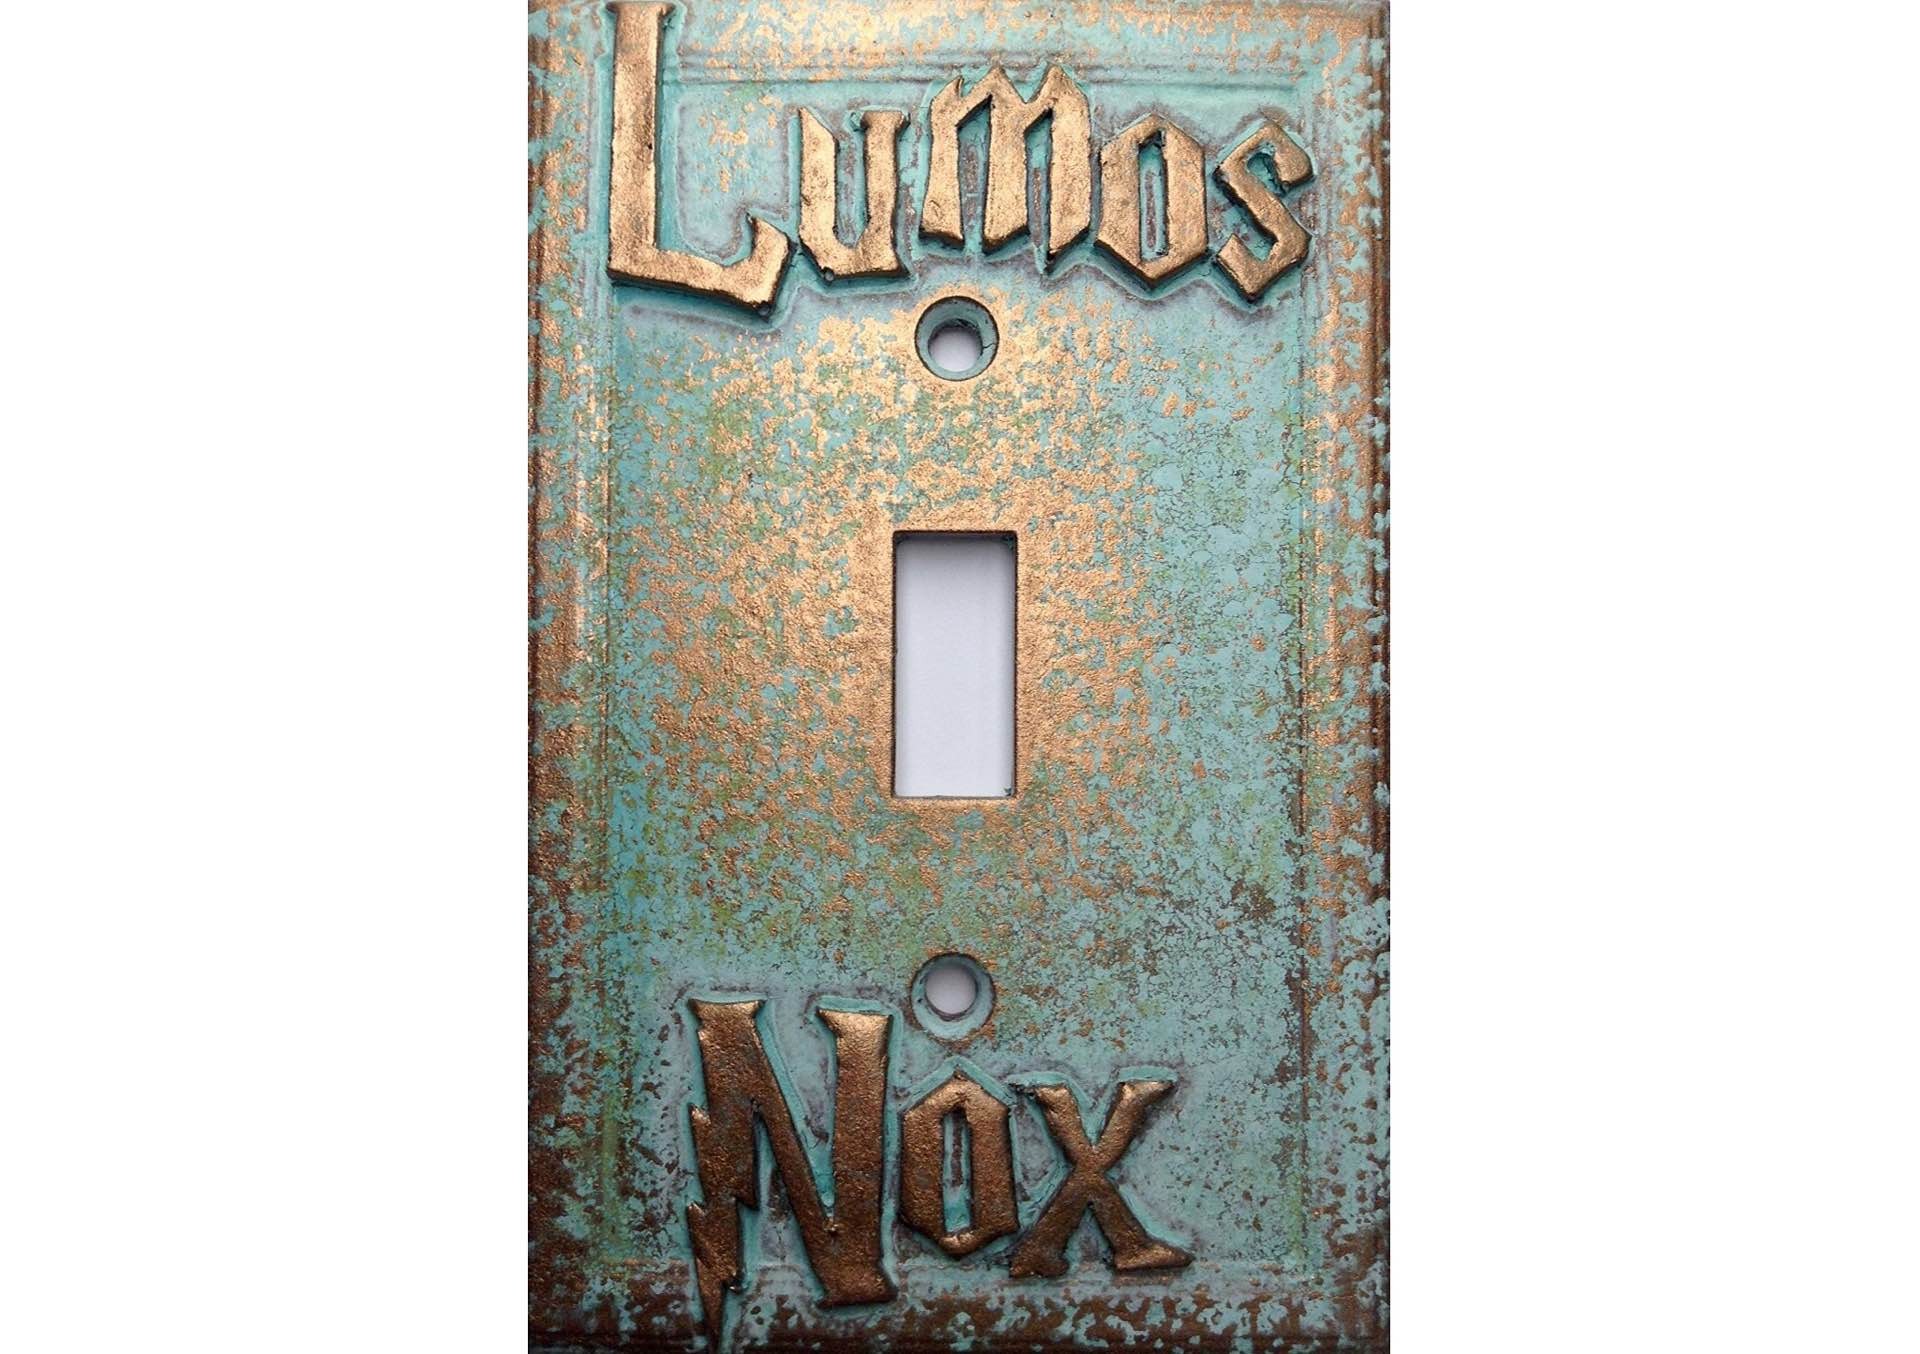 Harry Potter "Lumos/Nox" light switch cover. ($17)